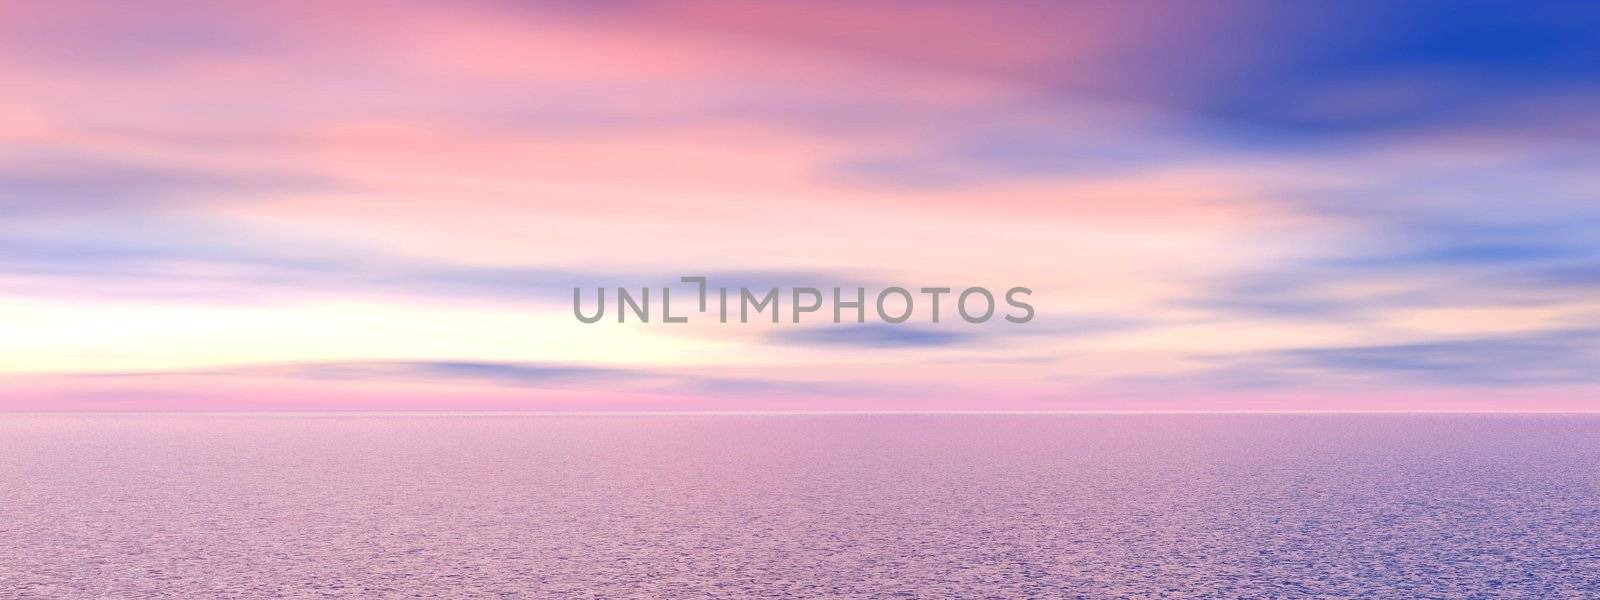 sunrise by mariephotos